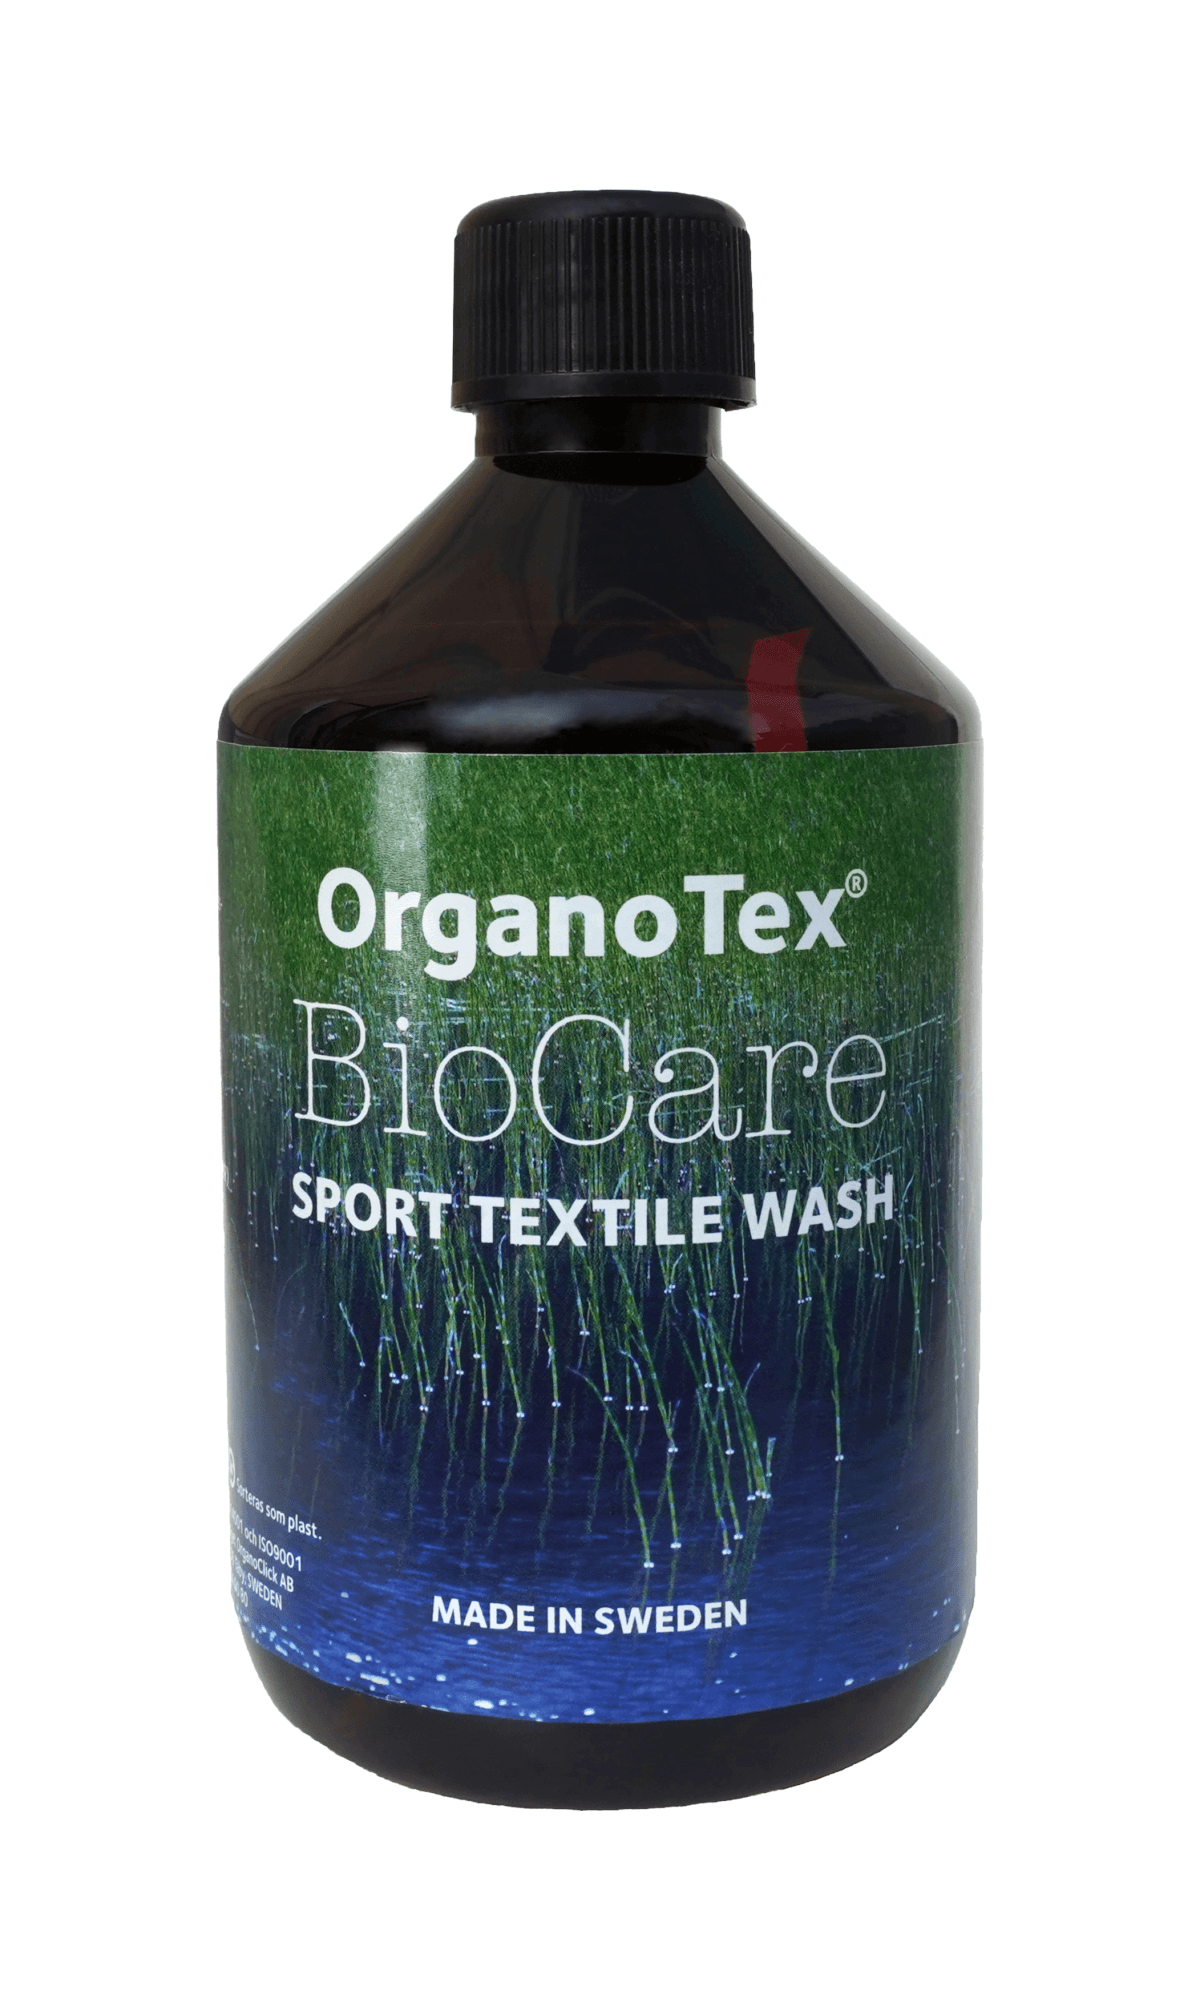 OrganoTex - BioCare Sport Textile Wash - Biobased detergent - Weekendbee - sustainable sportswear